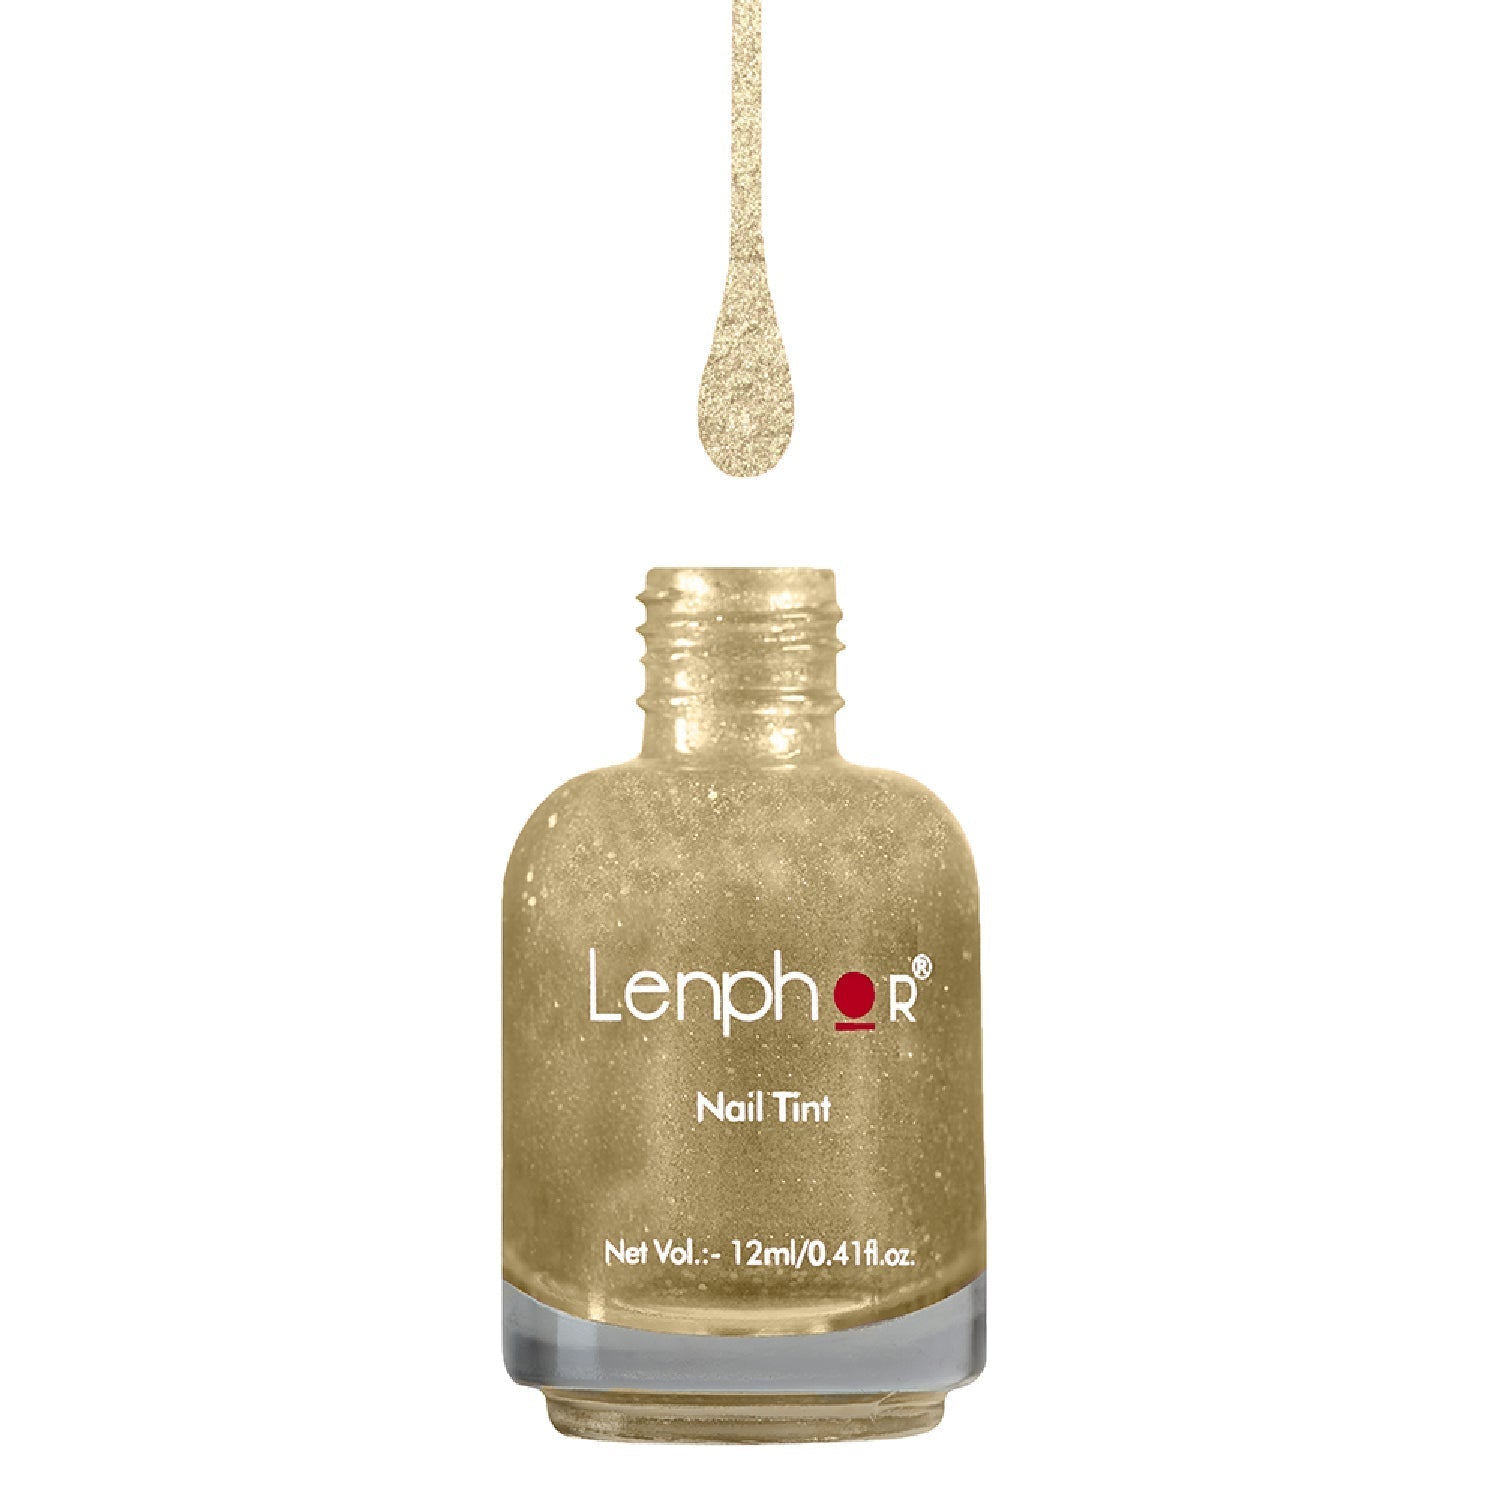 Glitter Gel Nail Polish - Lenphor